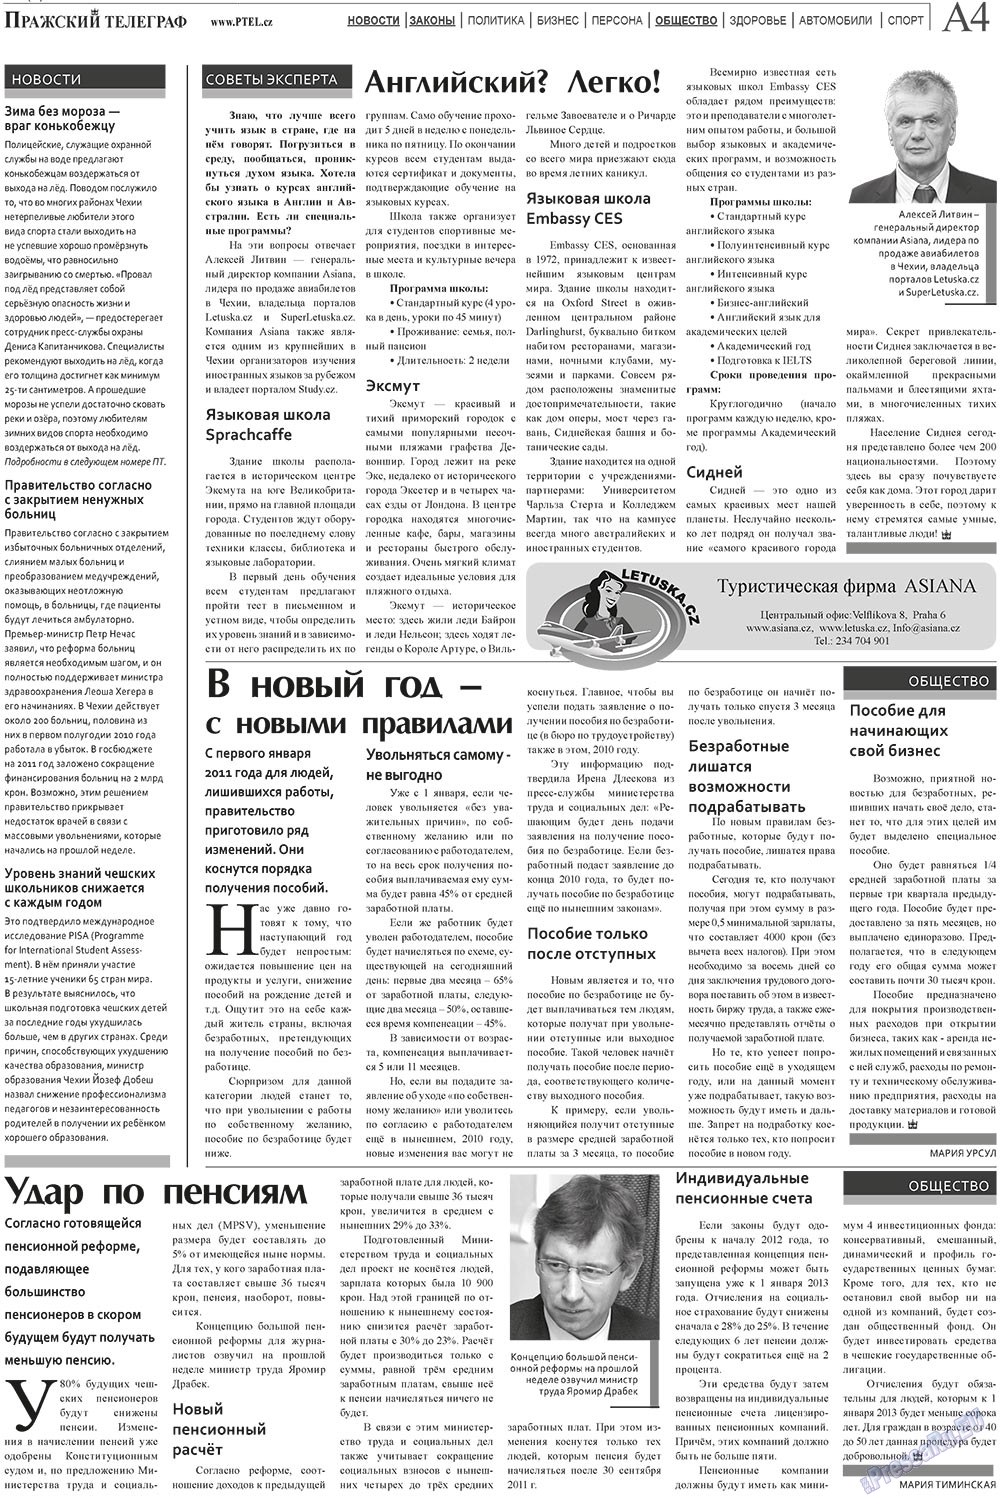 Пражский телеграф, газета. 2010 №49 стр.4